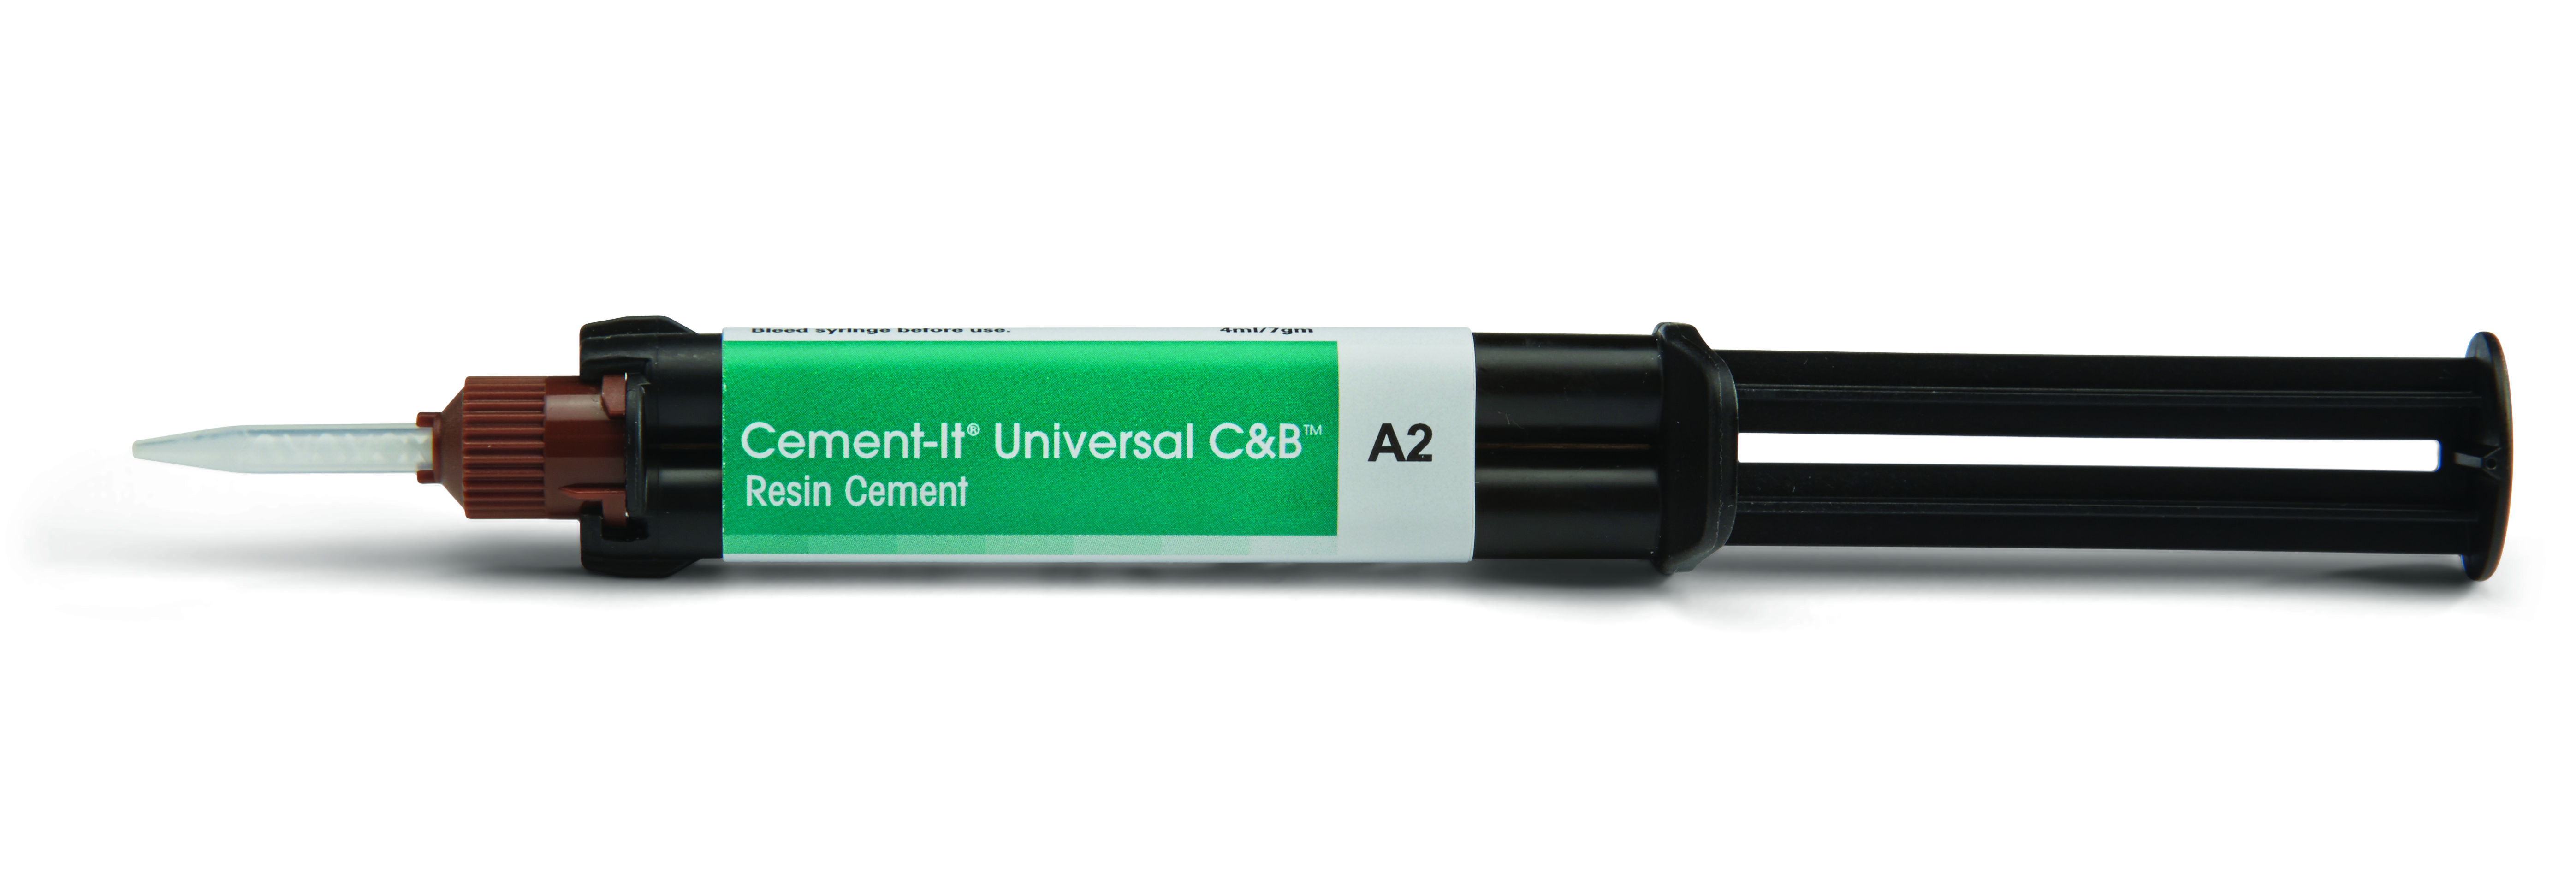 Cement-It: Universal C&B Resin Cement